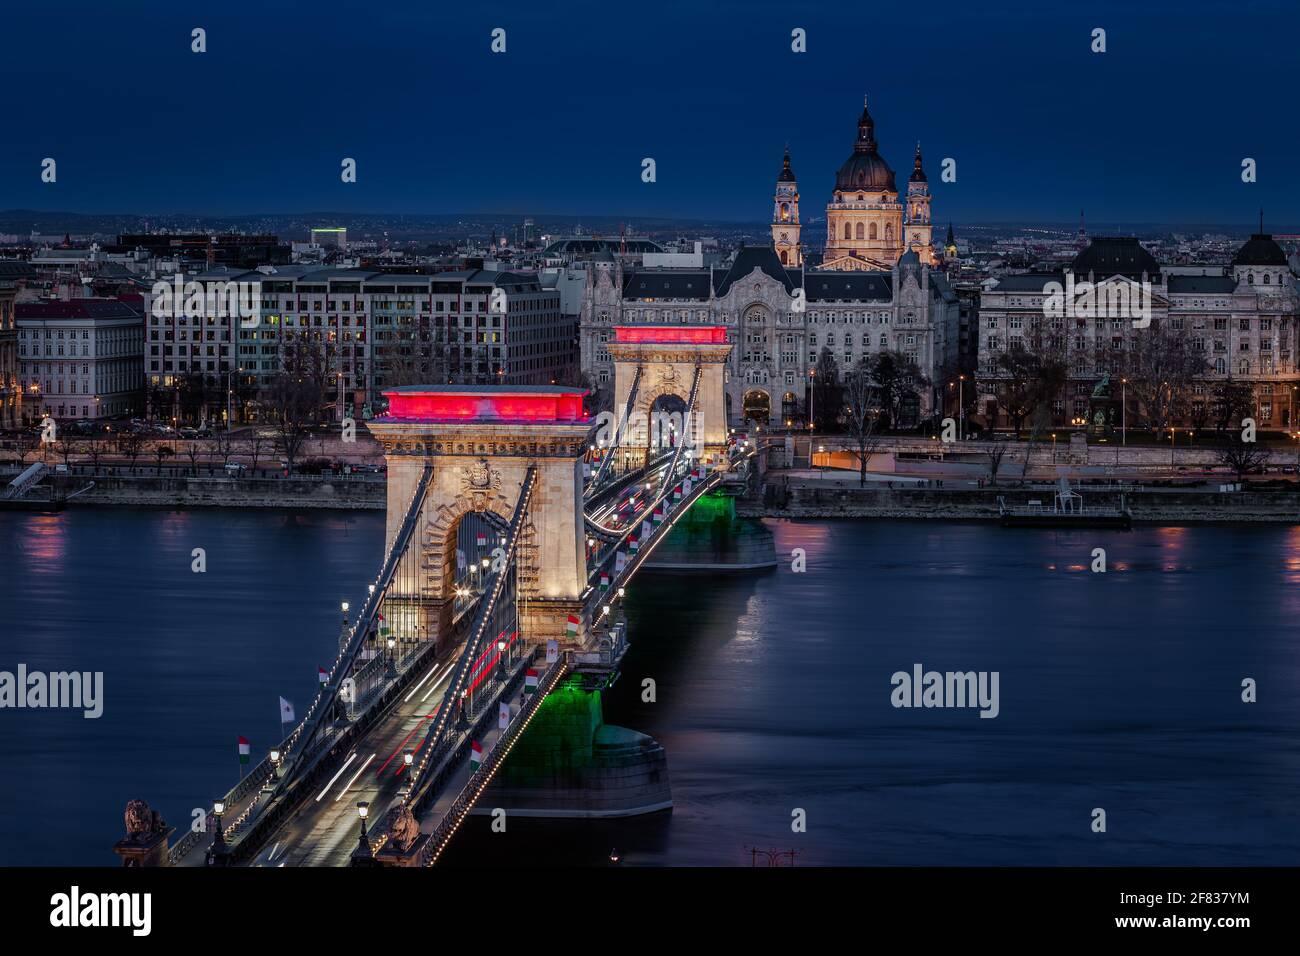 Budapest, Hungary - The world famous illuminated Szechenyi Chain Bridge (Lanchid) by night, lit up with national red, white and green colors, celebrat Stock Photo